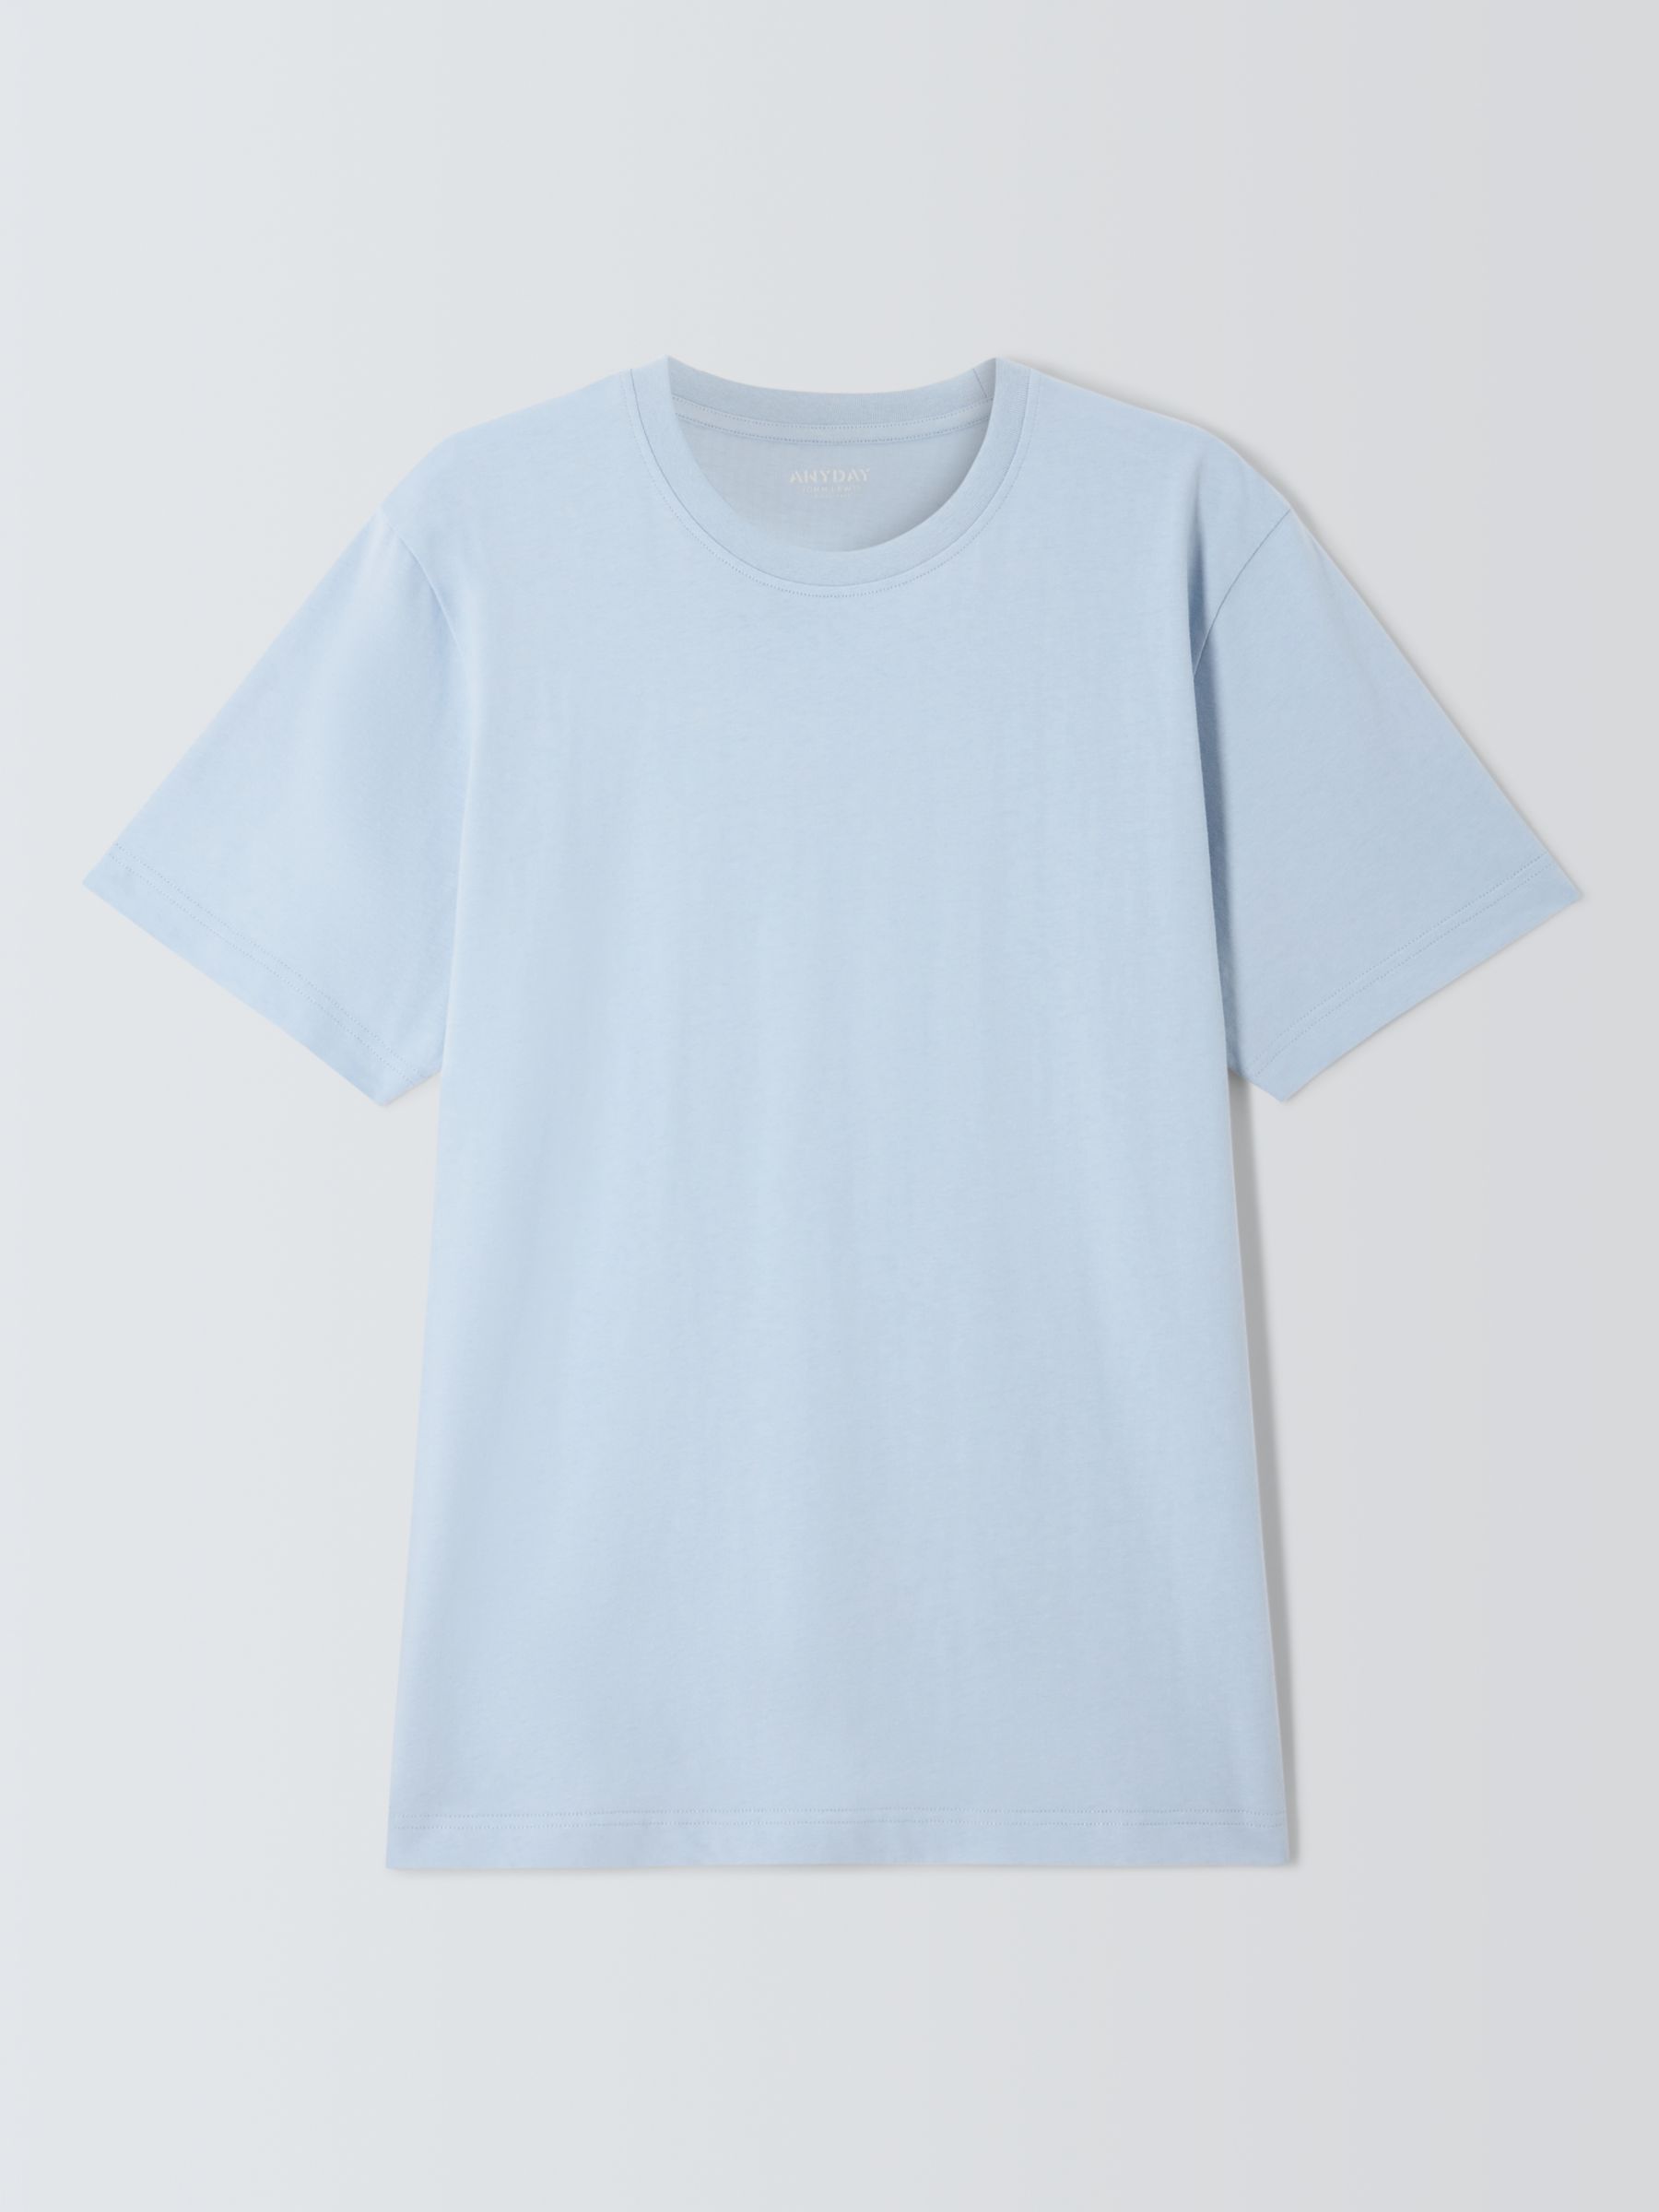 John Lewis ANYDAY Short Sleeve Plain T-Shirt, Zen Blue, S